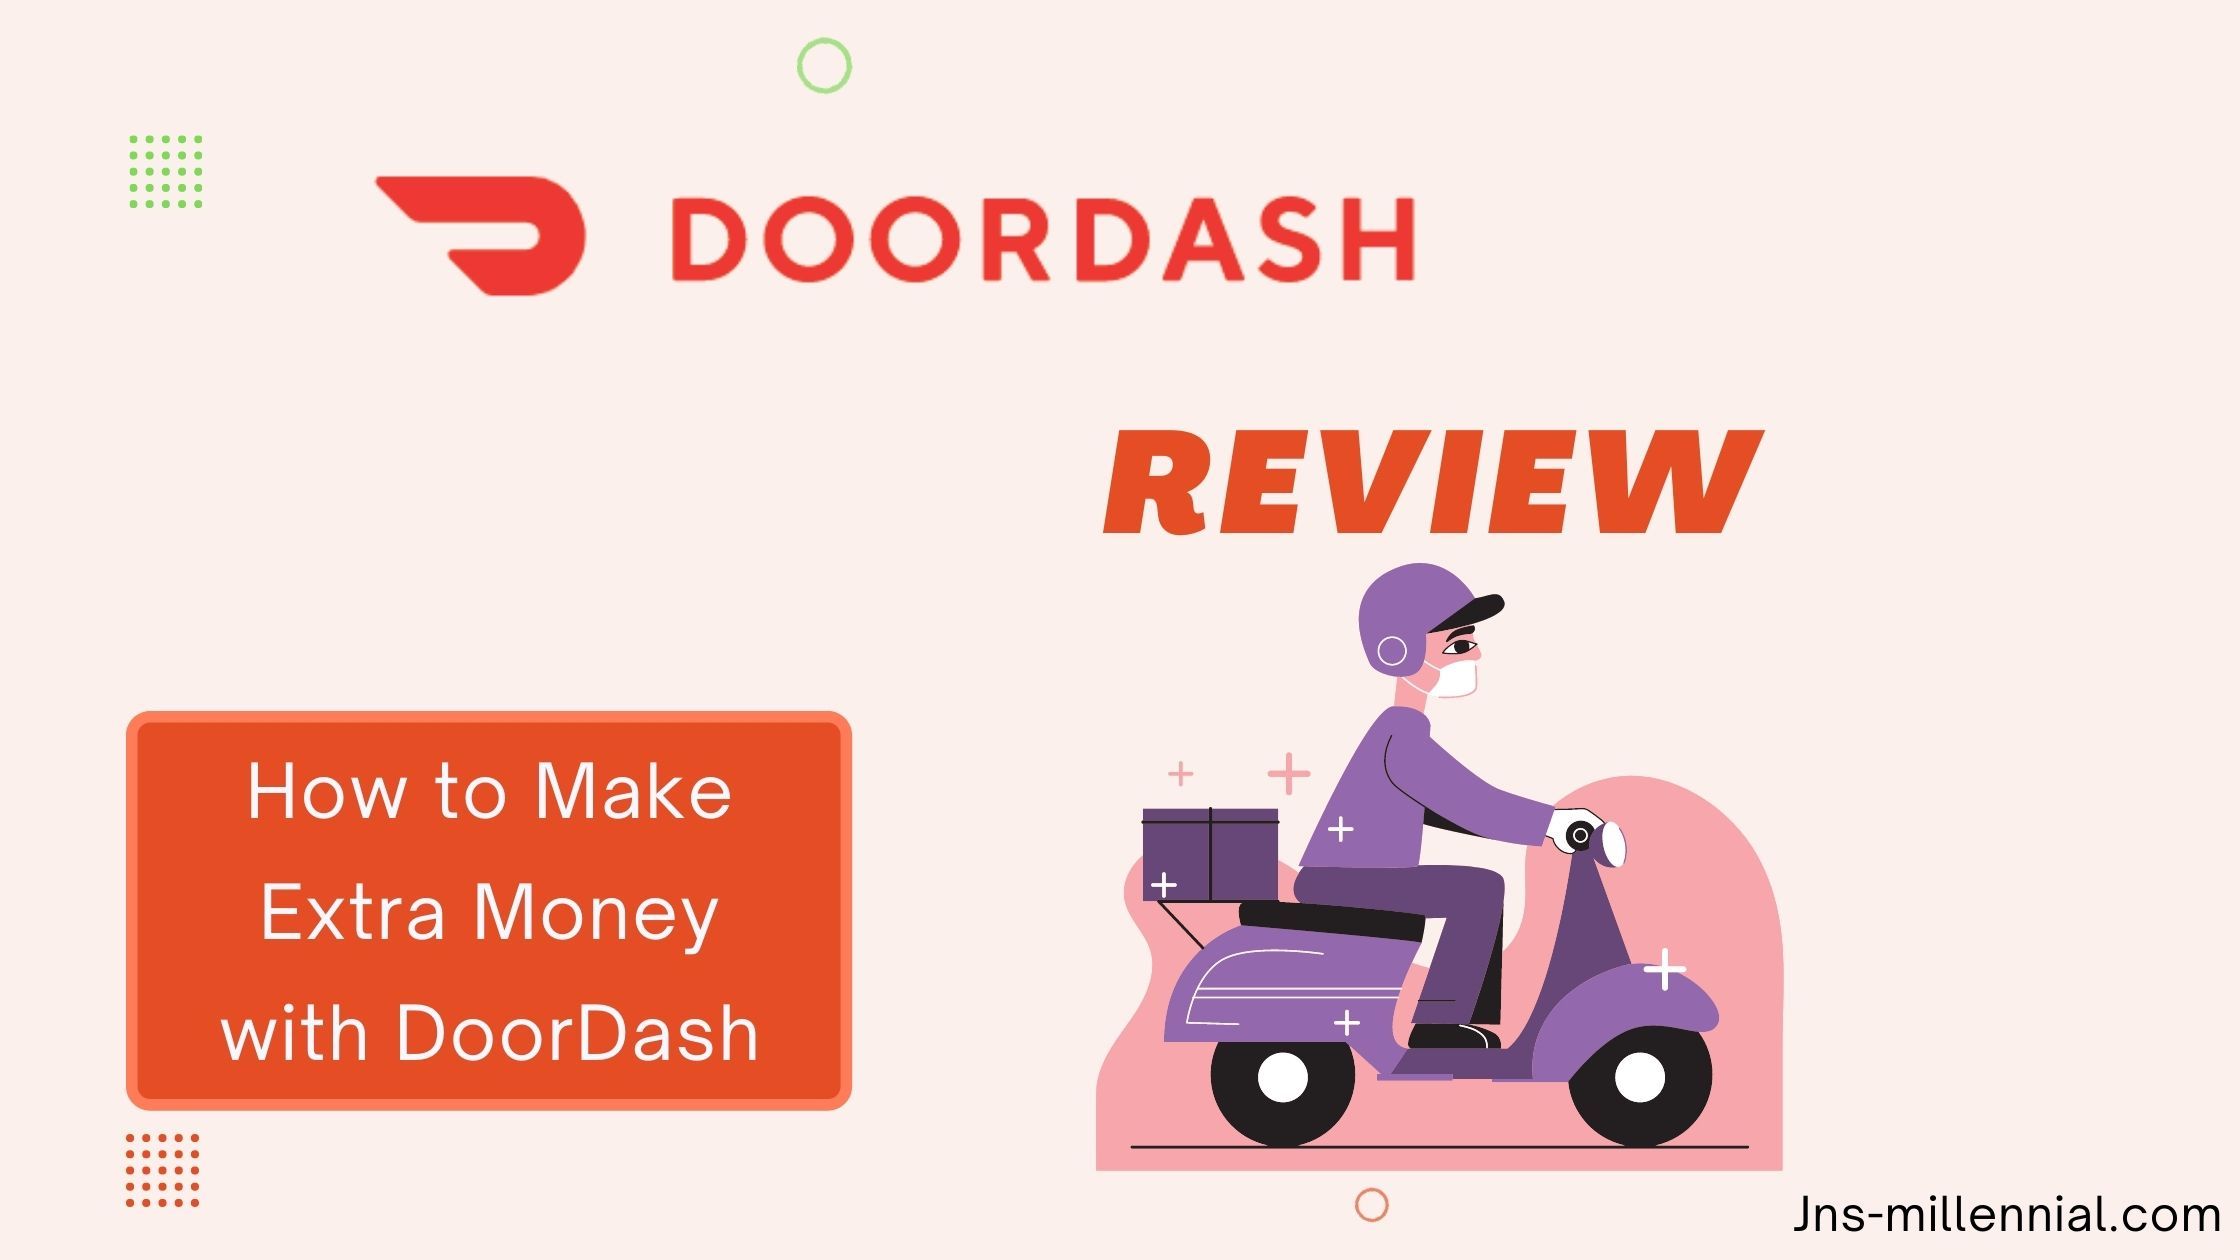 DoorDash Reviews: How to Make Extra Money with DoorDash